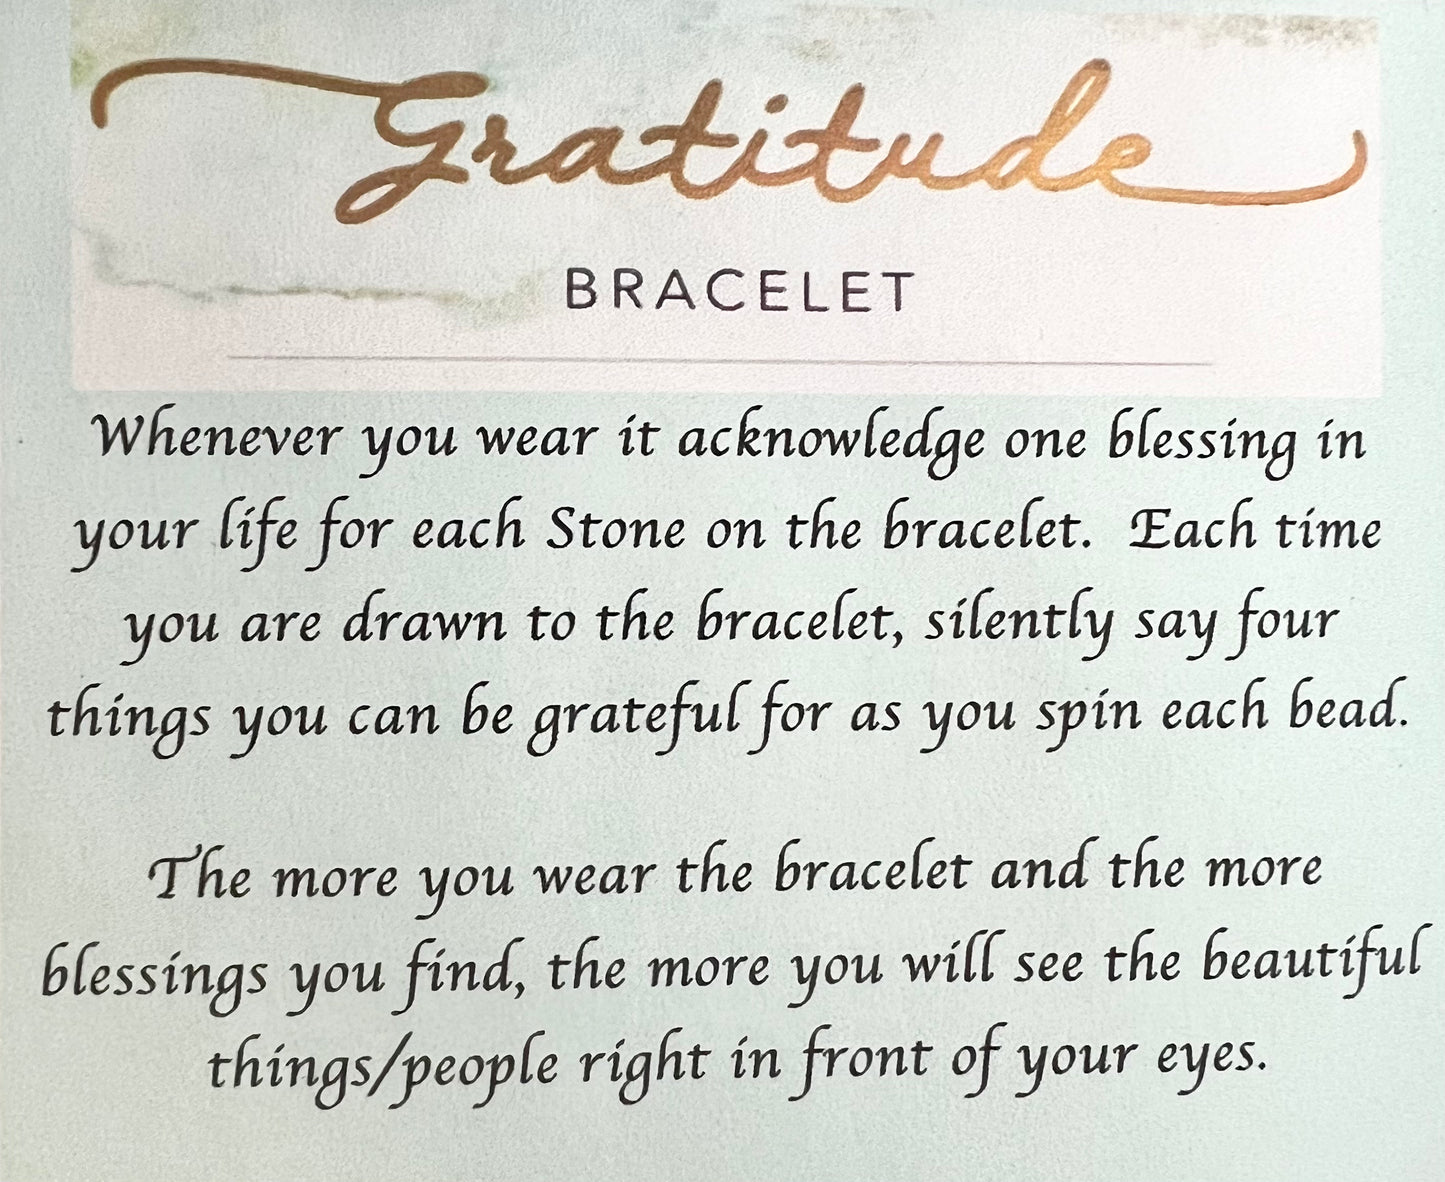 Amethyst Gratitude Bracelet